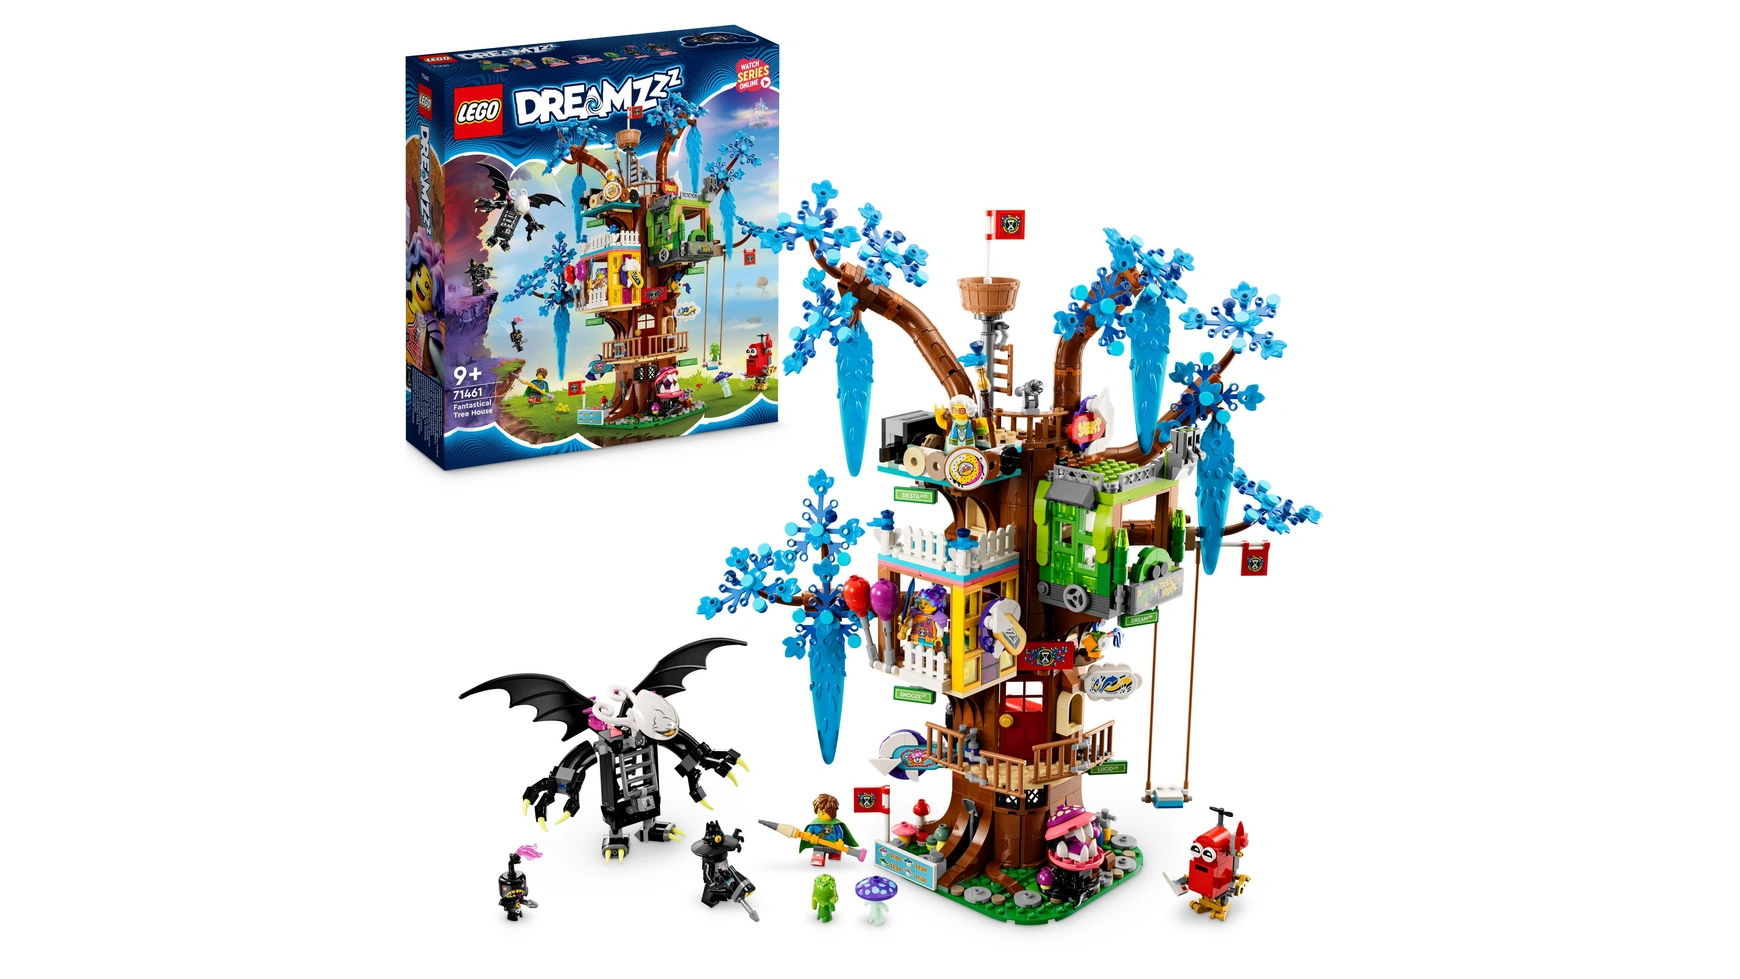 Lego DREAMZzz Фантастический домик на дереве, соберите 2 типа модели lego dreamzzz фантастический домик на дереве соберите 2 типа модели